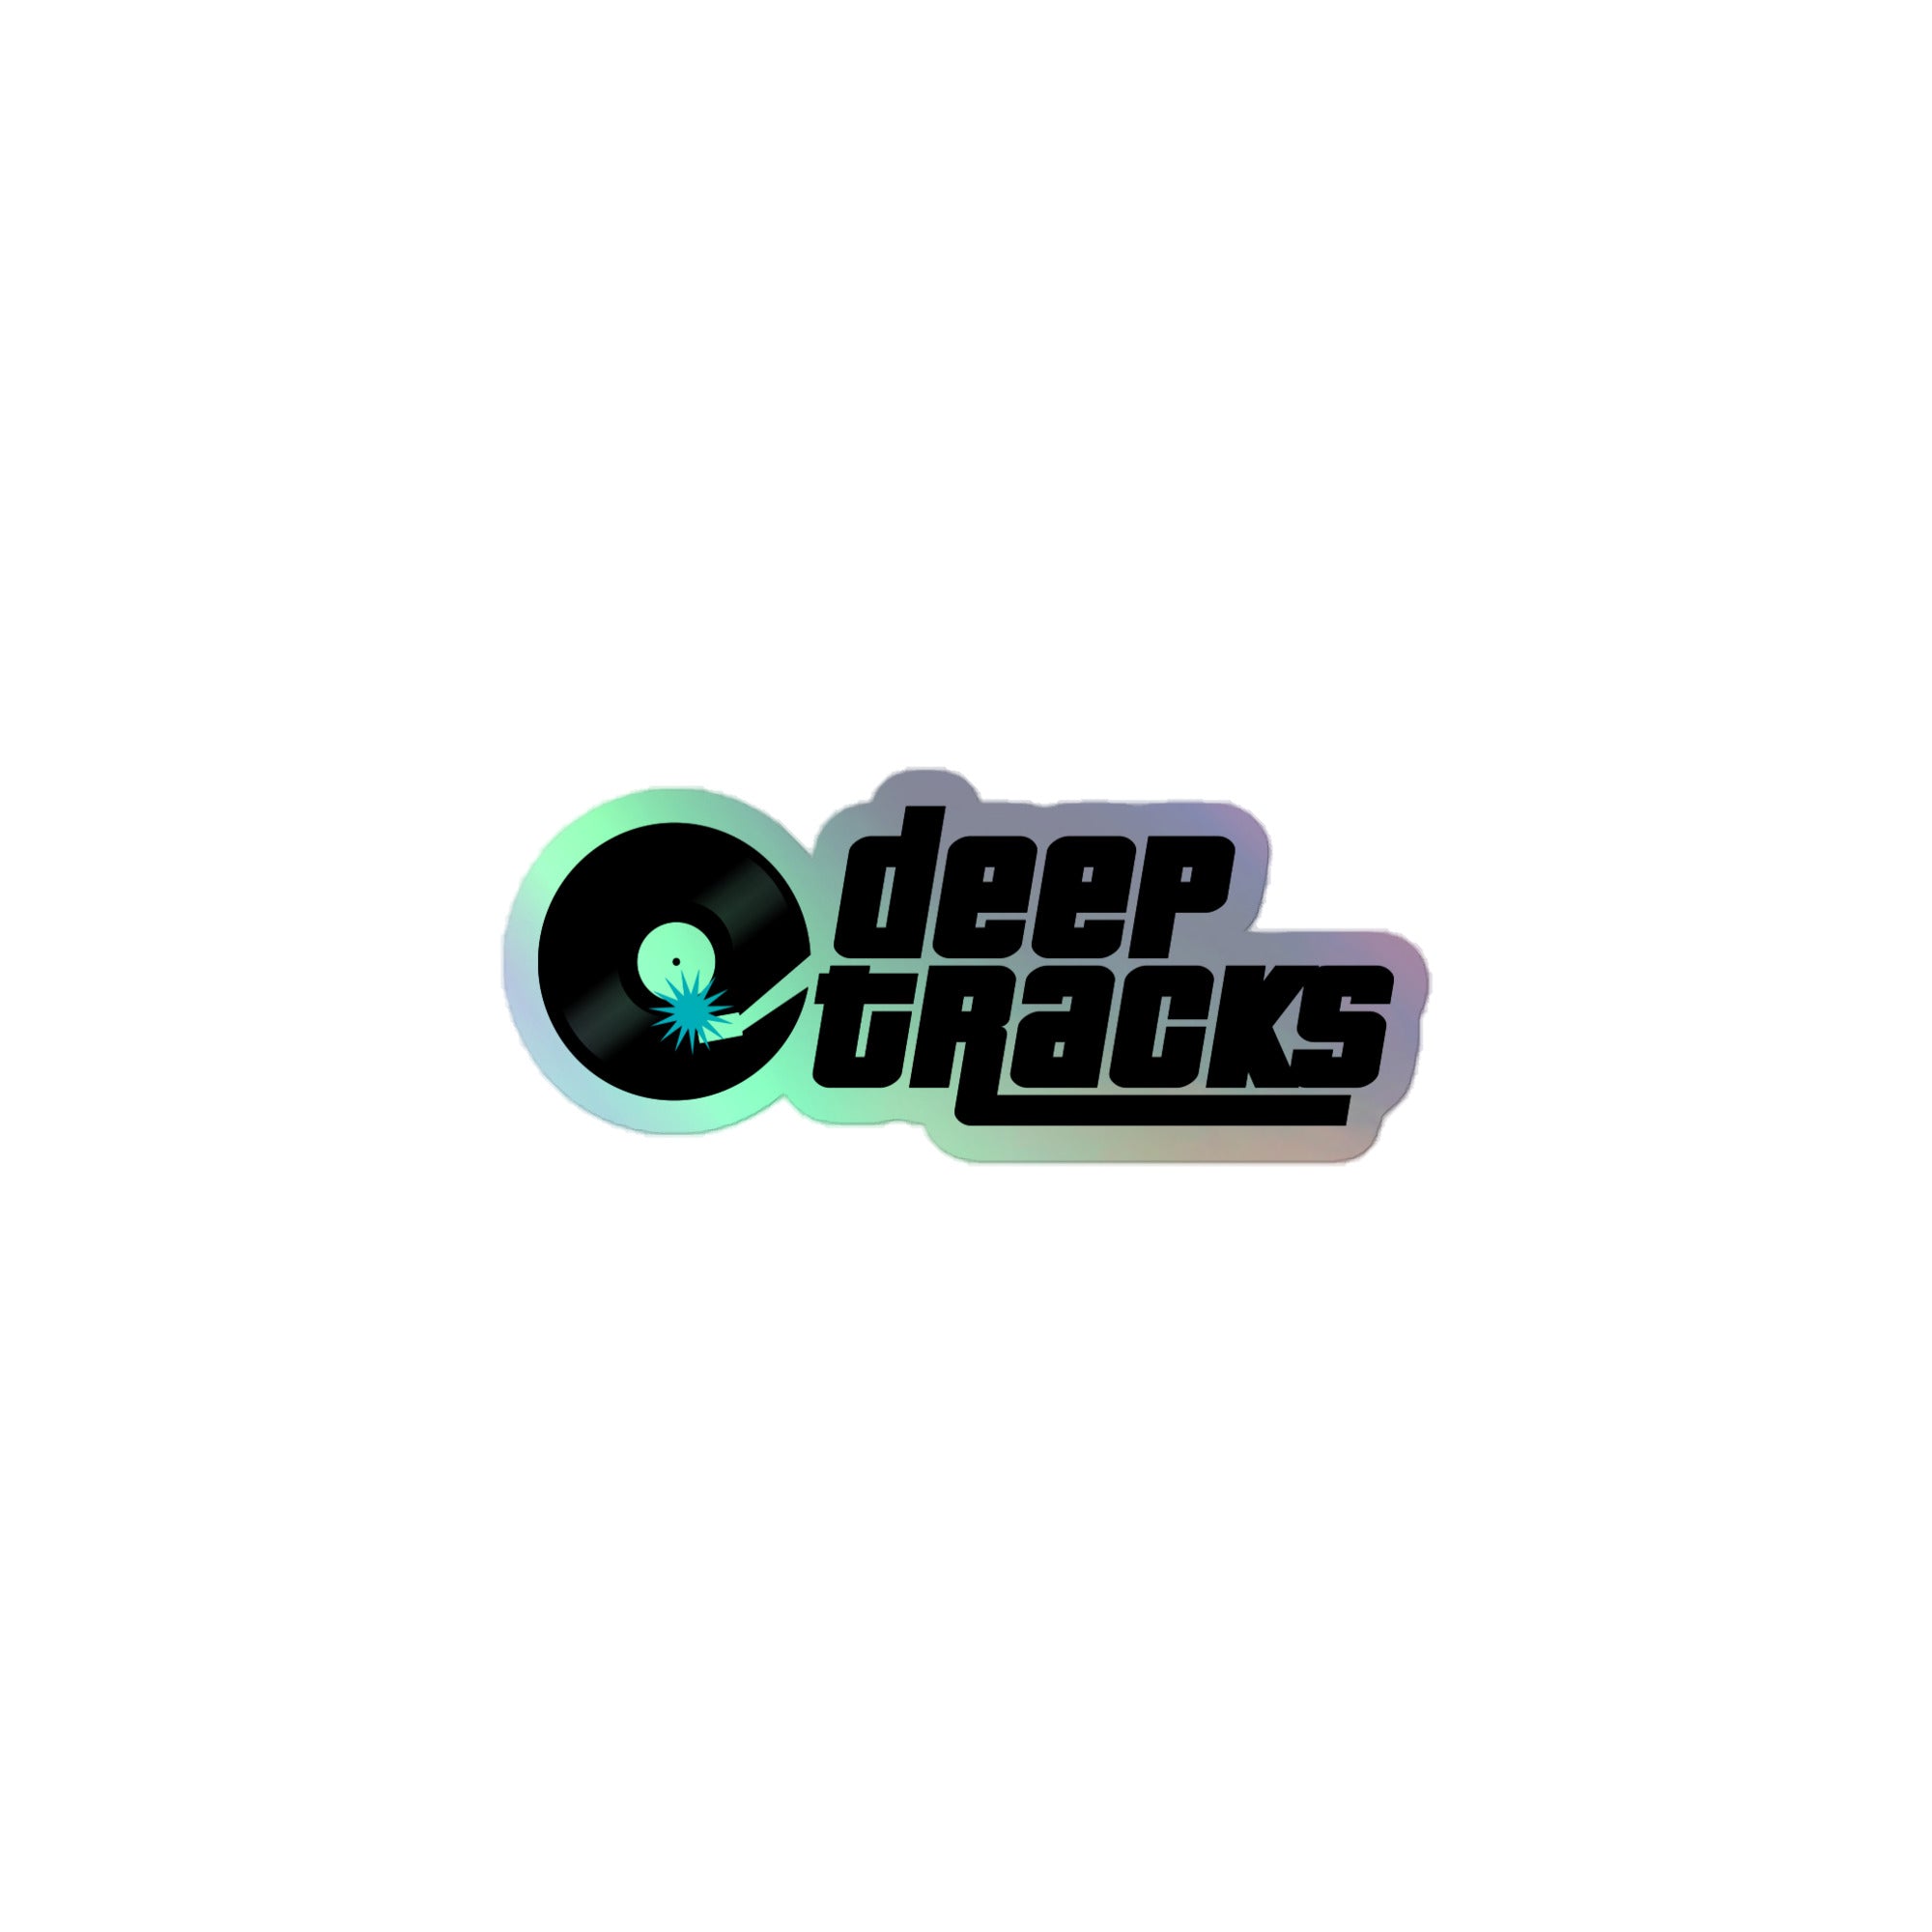 Deep Tracks: Holographic Sticker